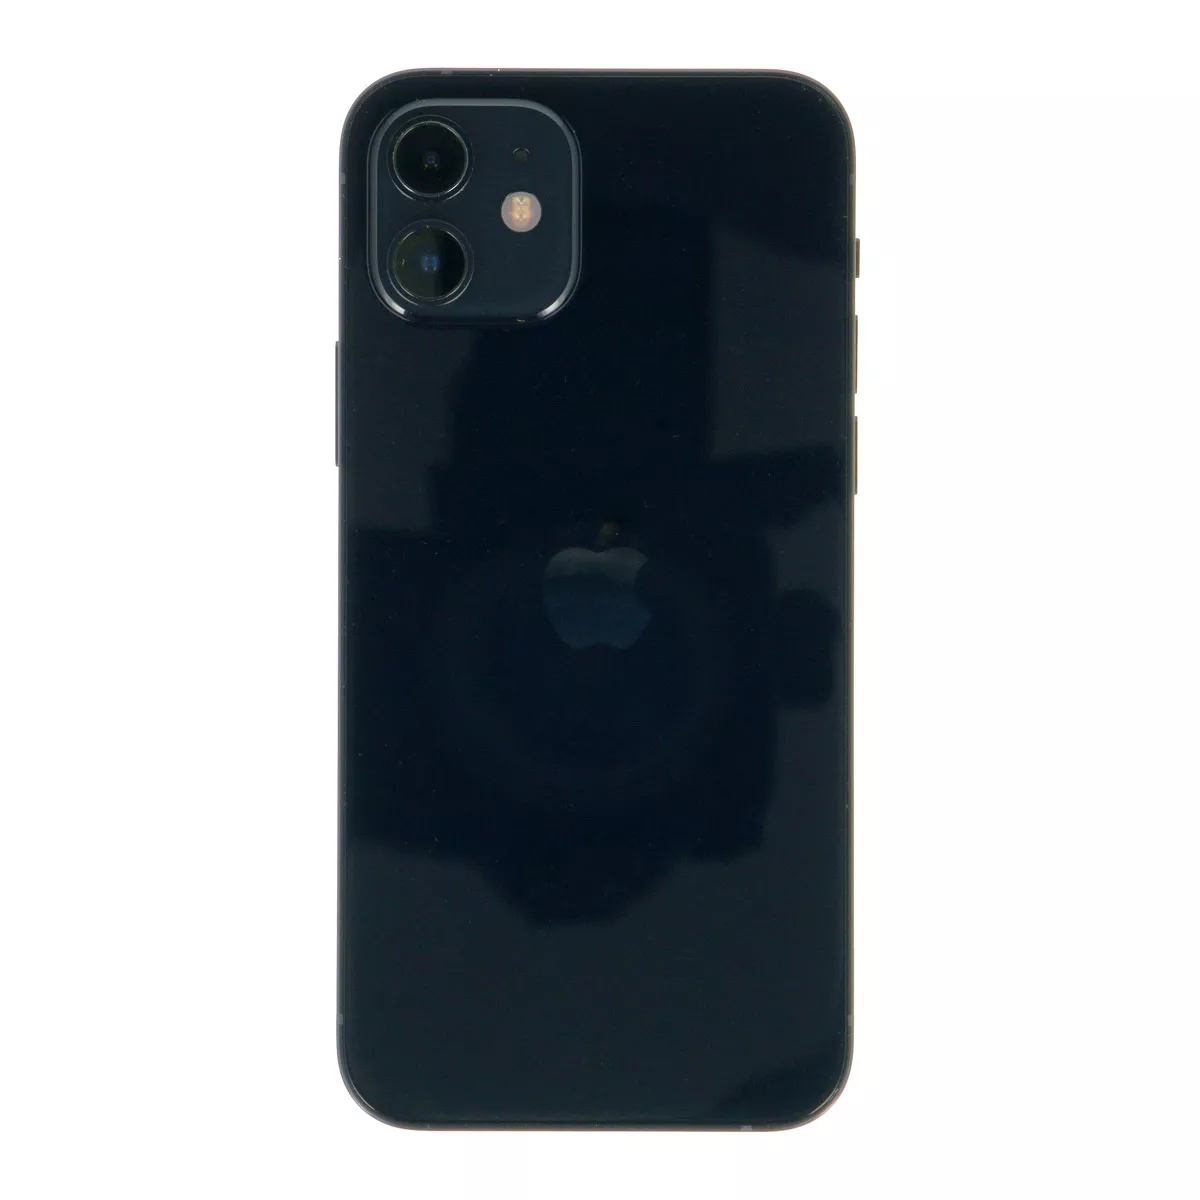 Apple iPhone 12 128 GB Black B